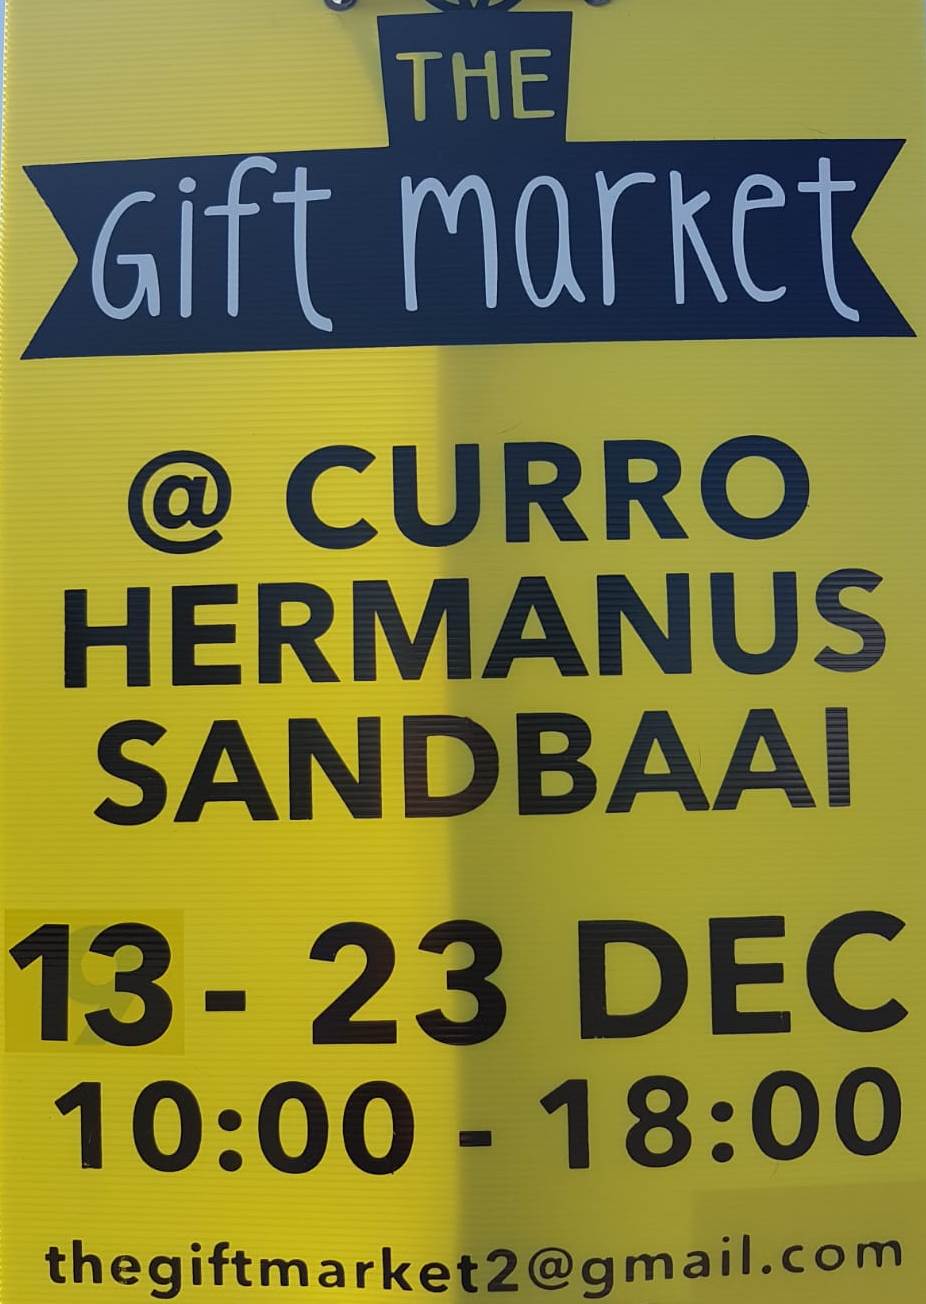 Arts and craft gift market at Curro school, Hermanus